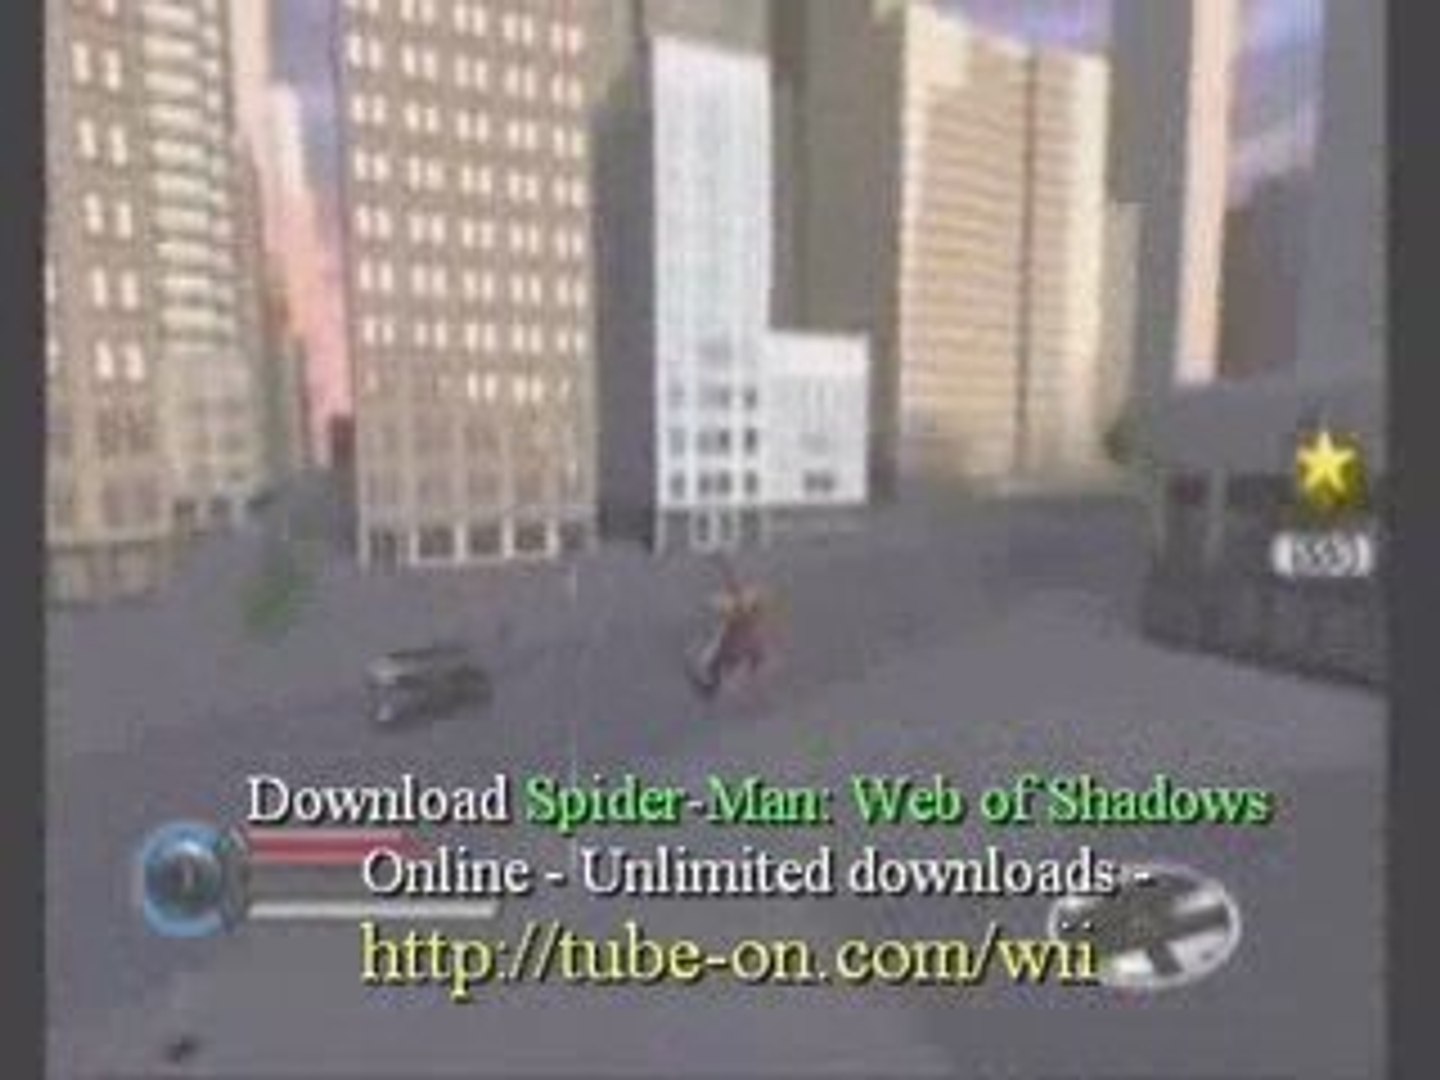 Spider-Man: Web of Shadows - Nintendo Wii, Nintendo Wii